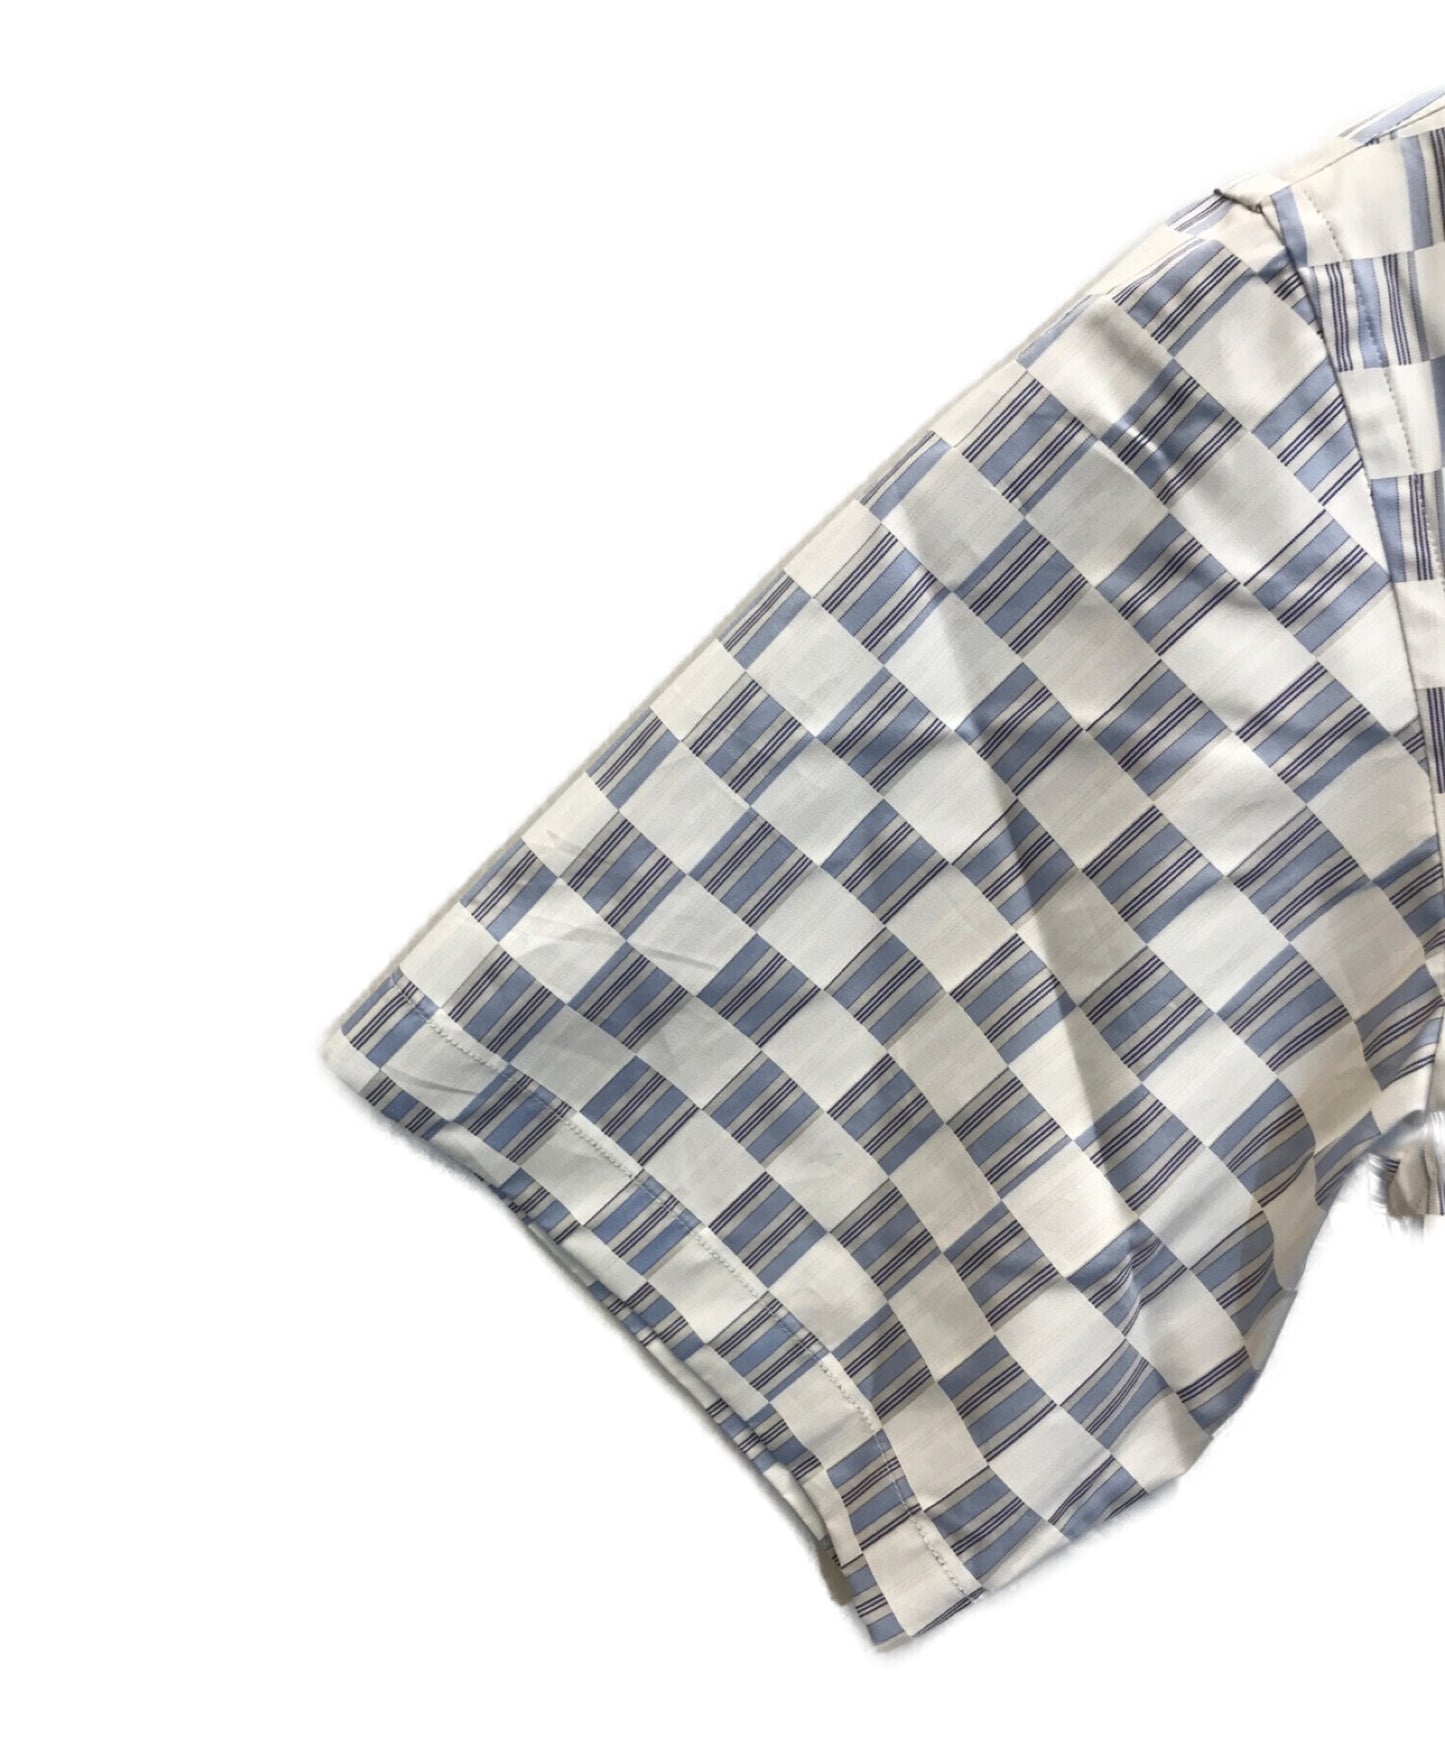 COMME DES GARCONS HOMME DEUX Striped Checkered Flag短袖衬衫DK-B043